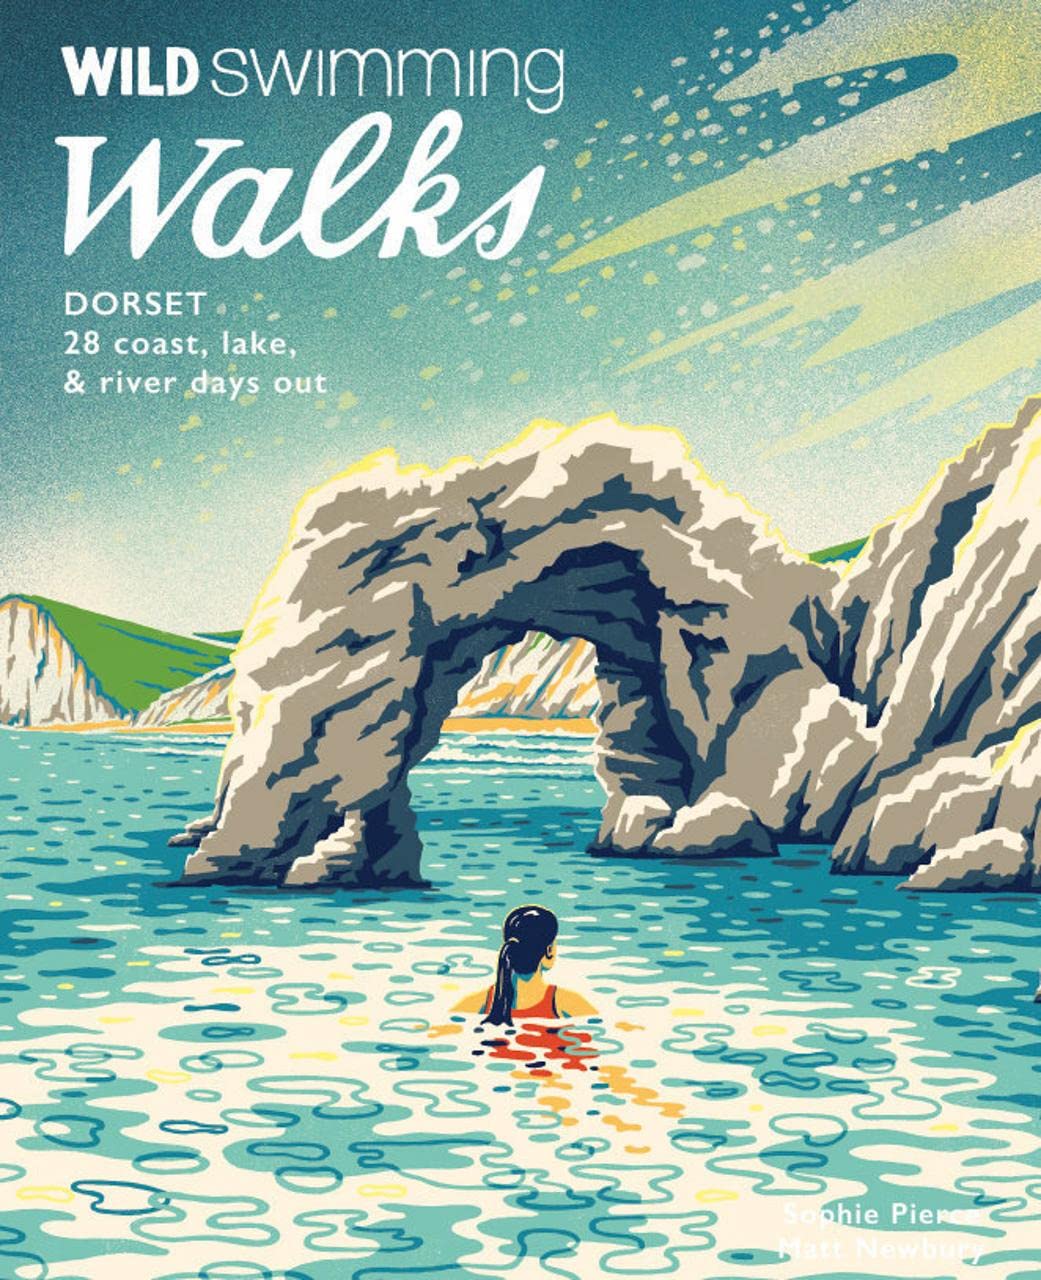 Wild Swimming Walks Dorset & East Devon: 28 coast, lake & river days out